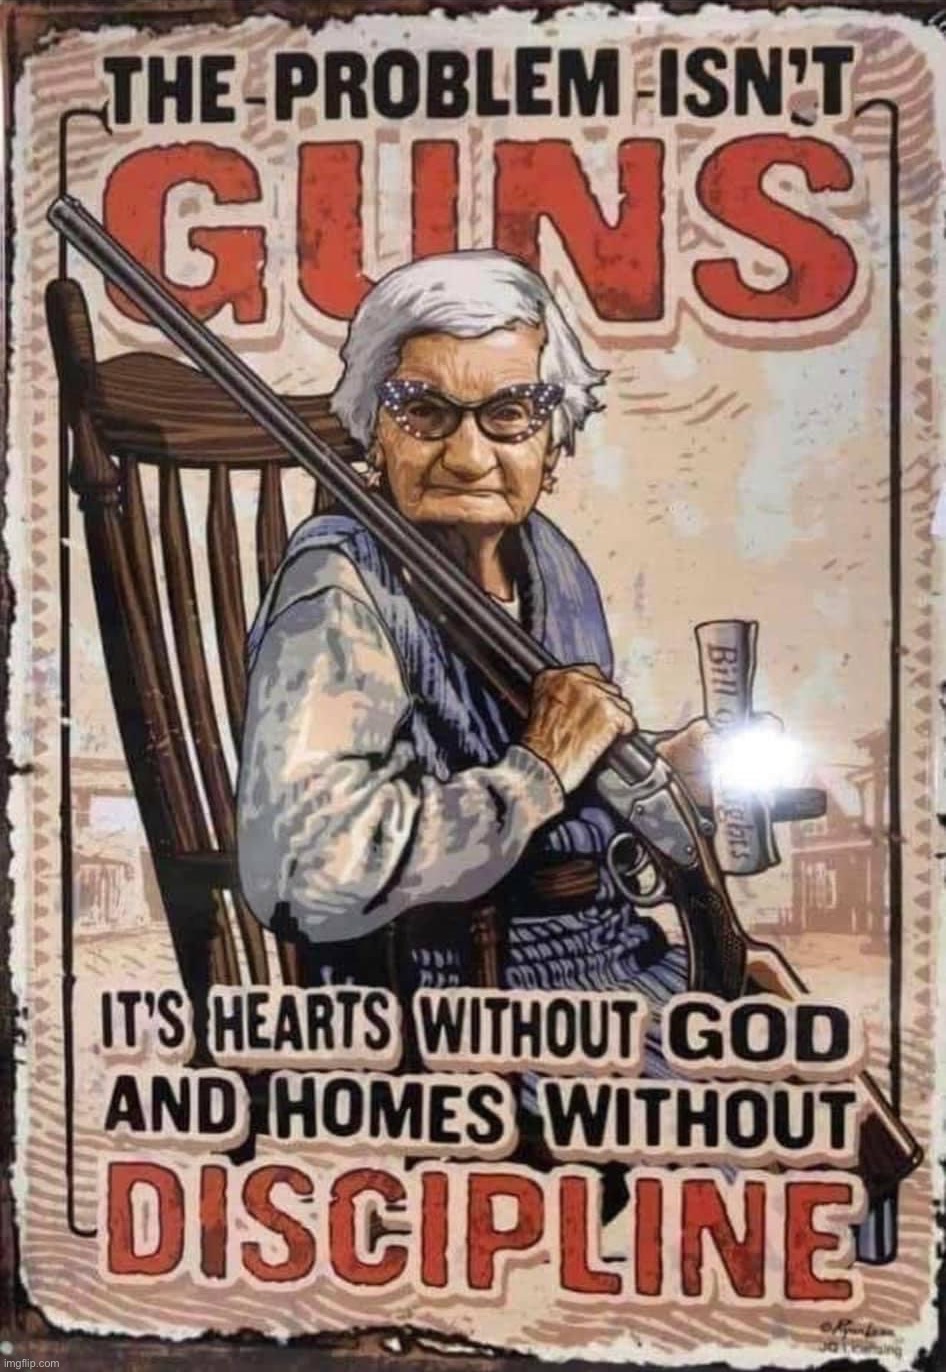 Based grandma | image tagged in the problem isn t guns,b,a,s,e,d | made w/ Imgflip meme maker